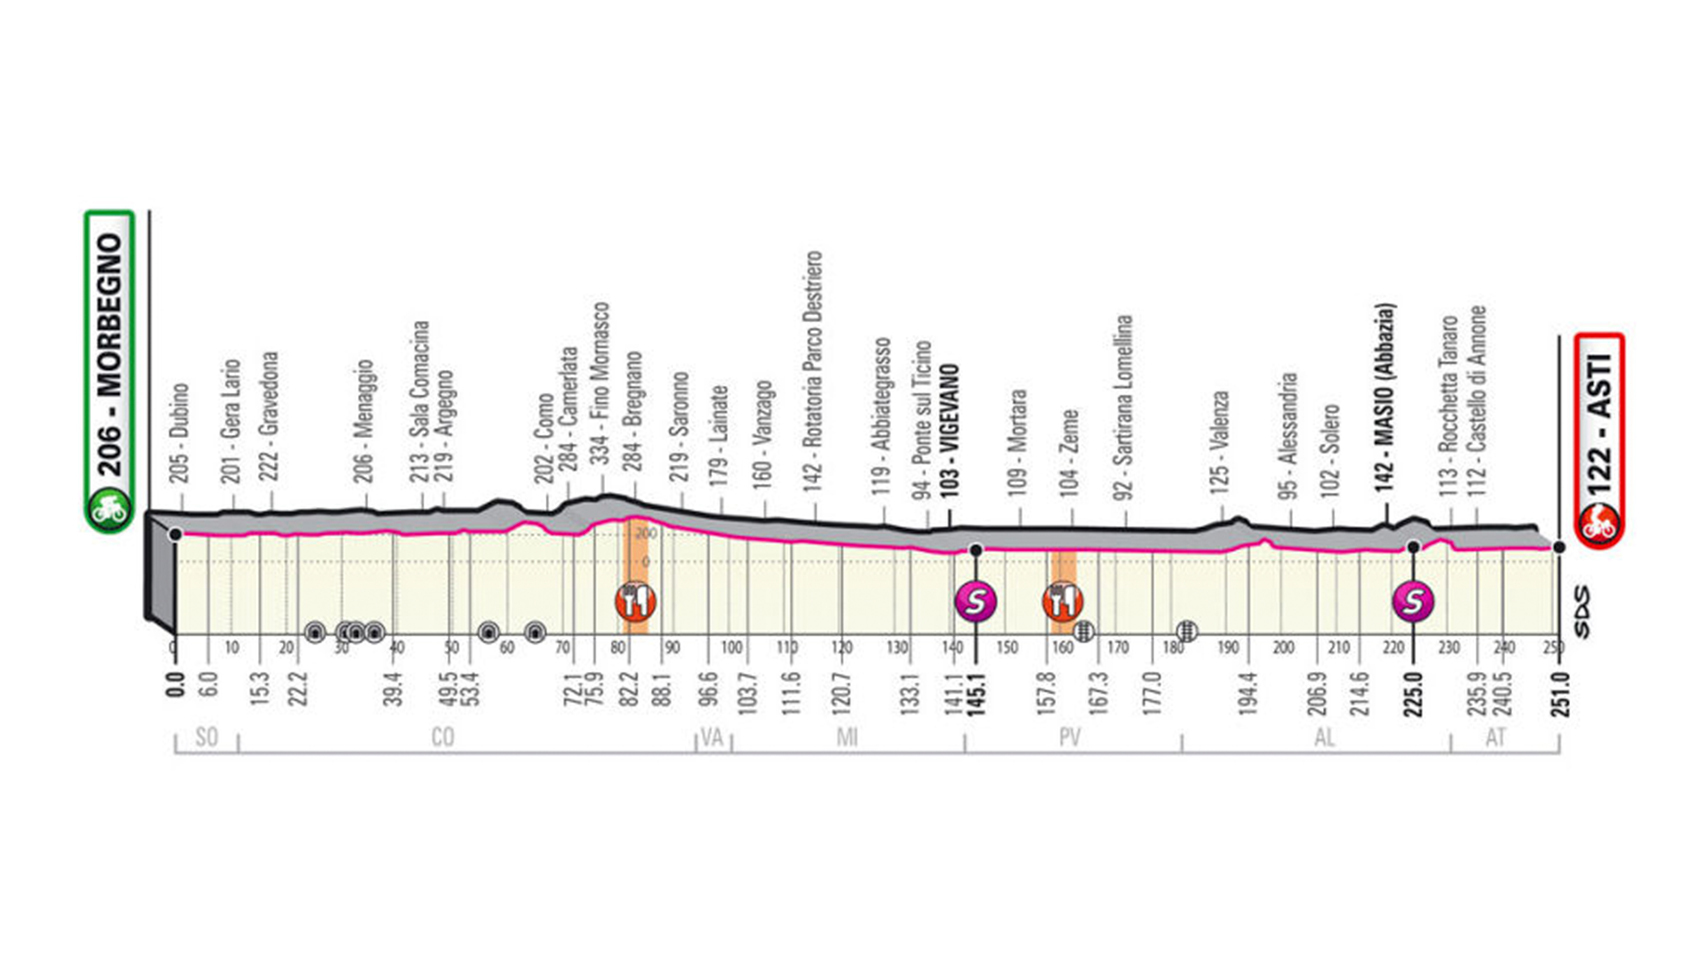 En directo | 19ª etapa del Giro de Italia 2020 entre Morbegno y Asti